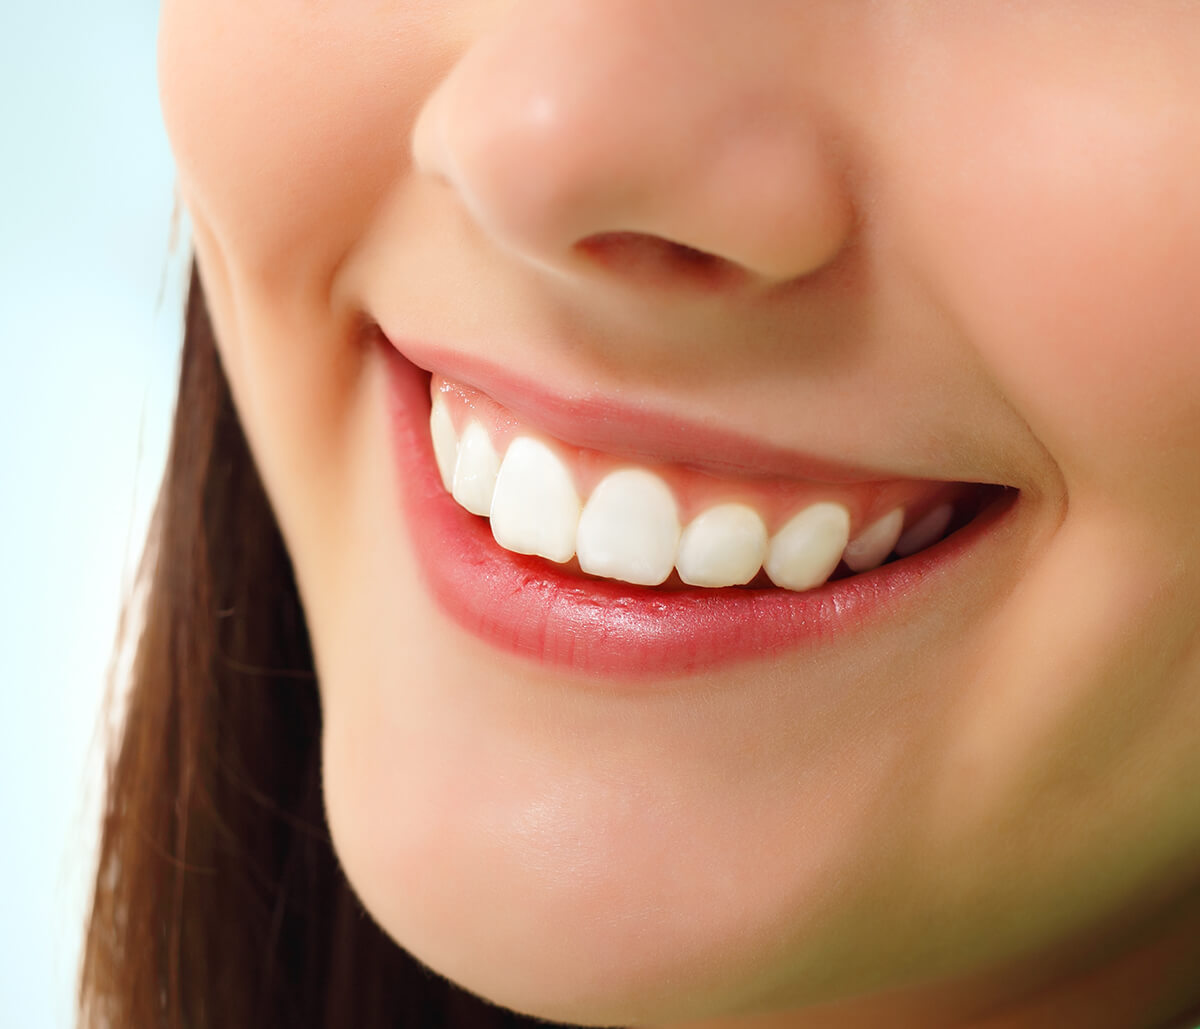 Teeth Whitening Services at Kingsgate Dental in Kirkland WA Area